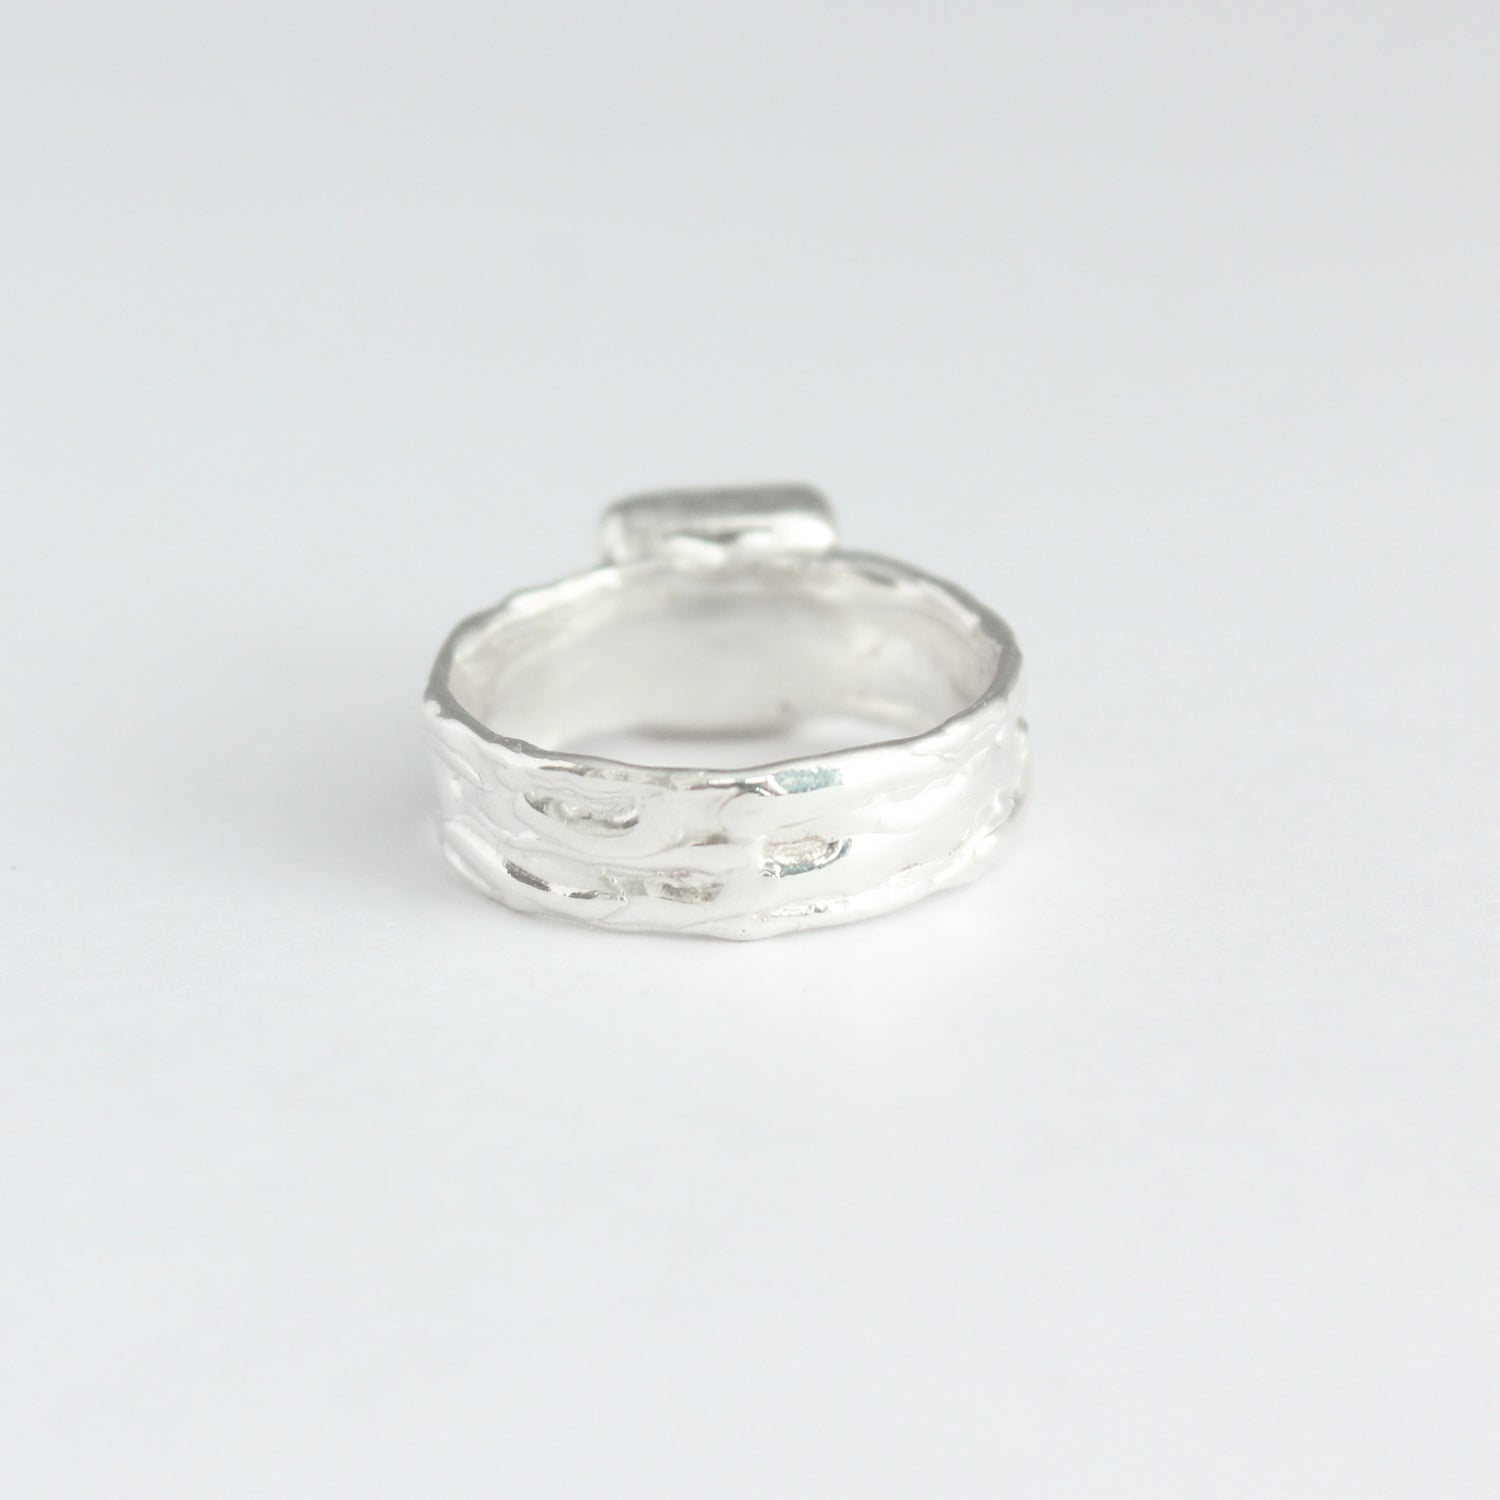 White Opal Ring - Size 6.5